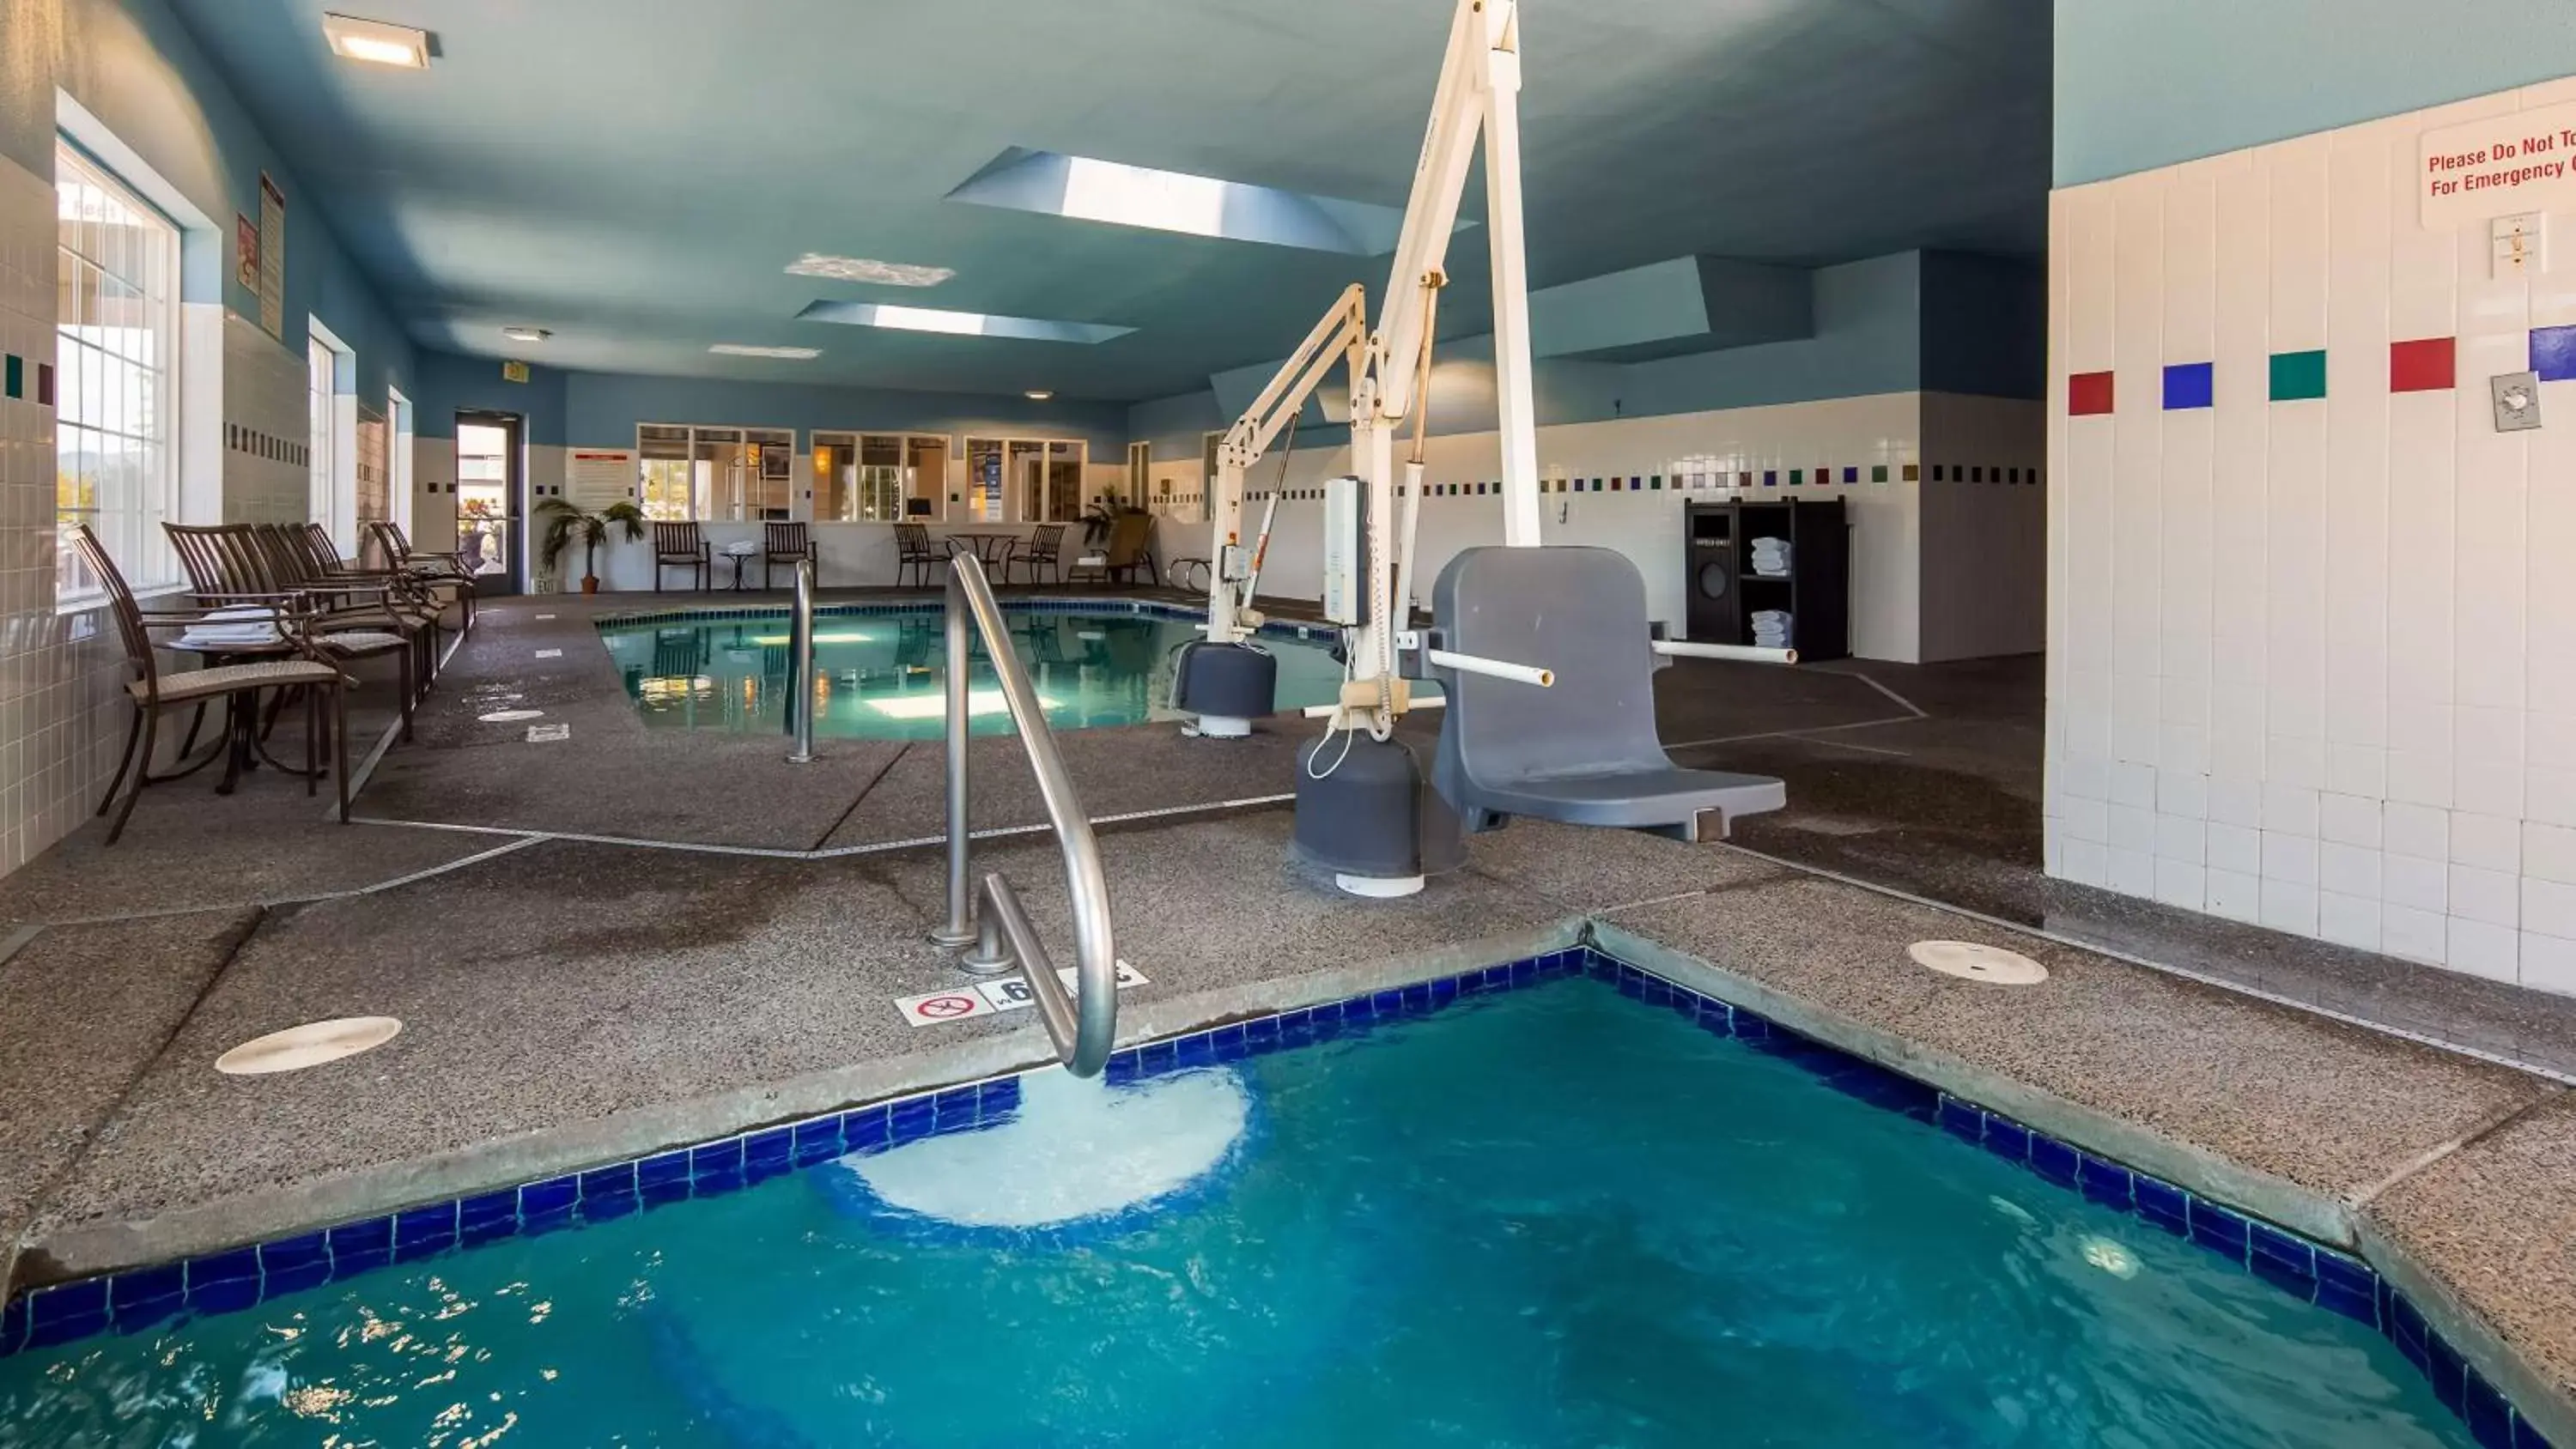 On site, Swimming Pool in Best Western Plus Liberty Lake Inn